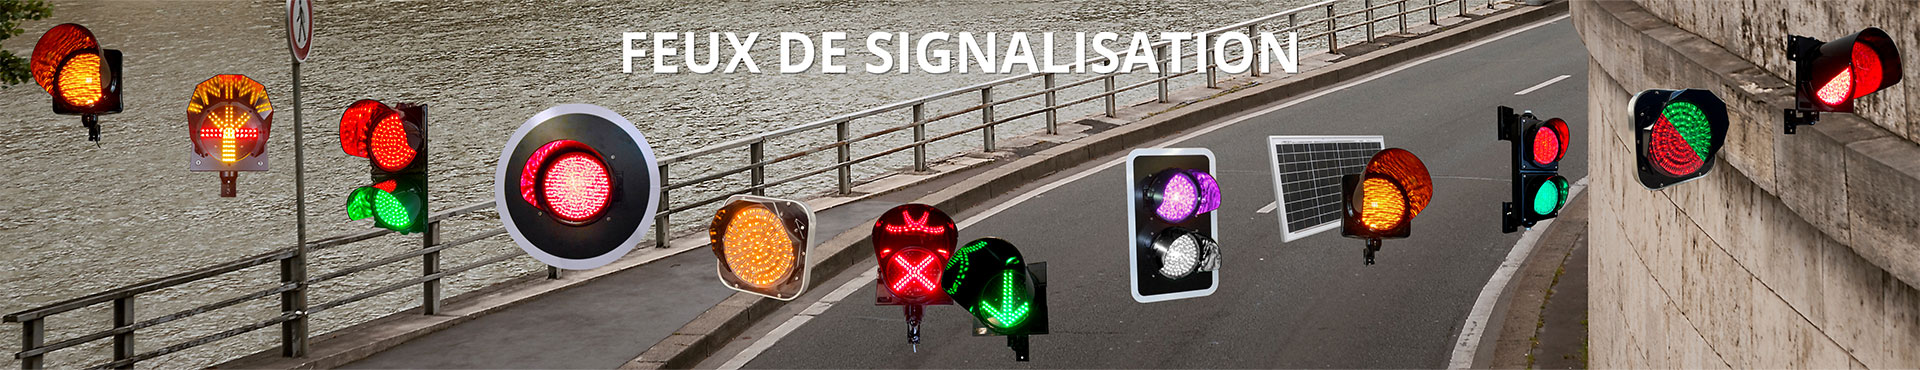 Trafic : Signalisation routière